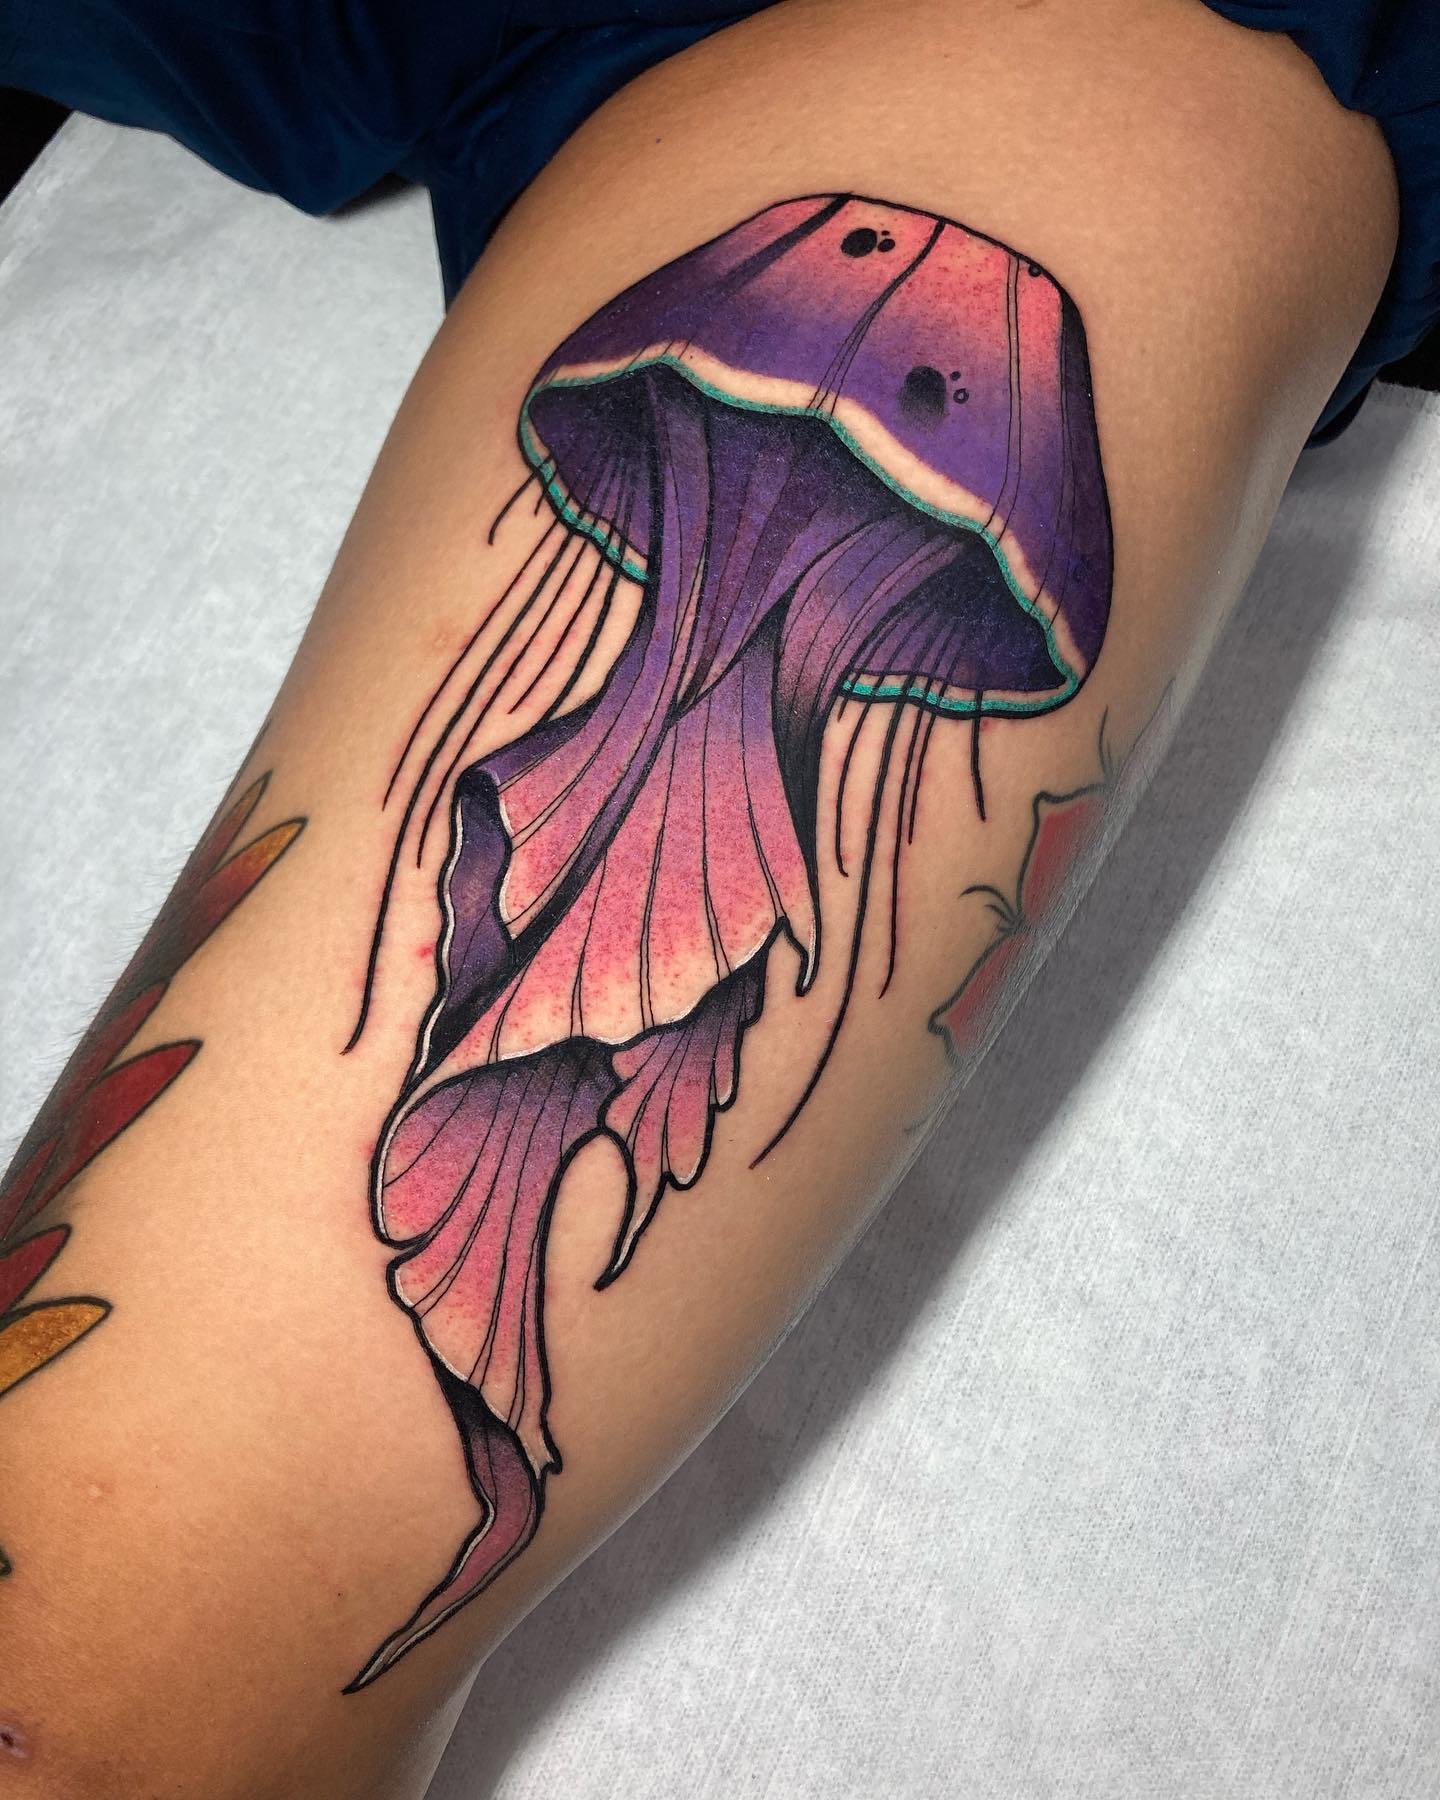 Tatuaje de medusa purpura genial